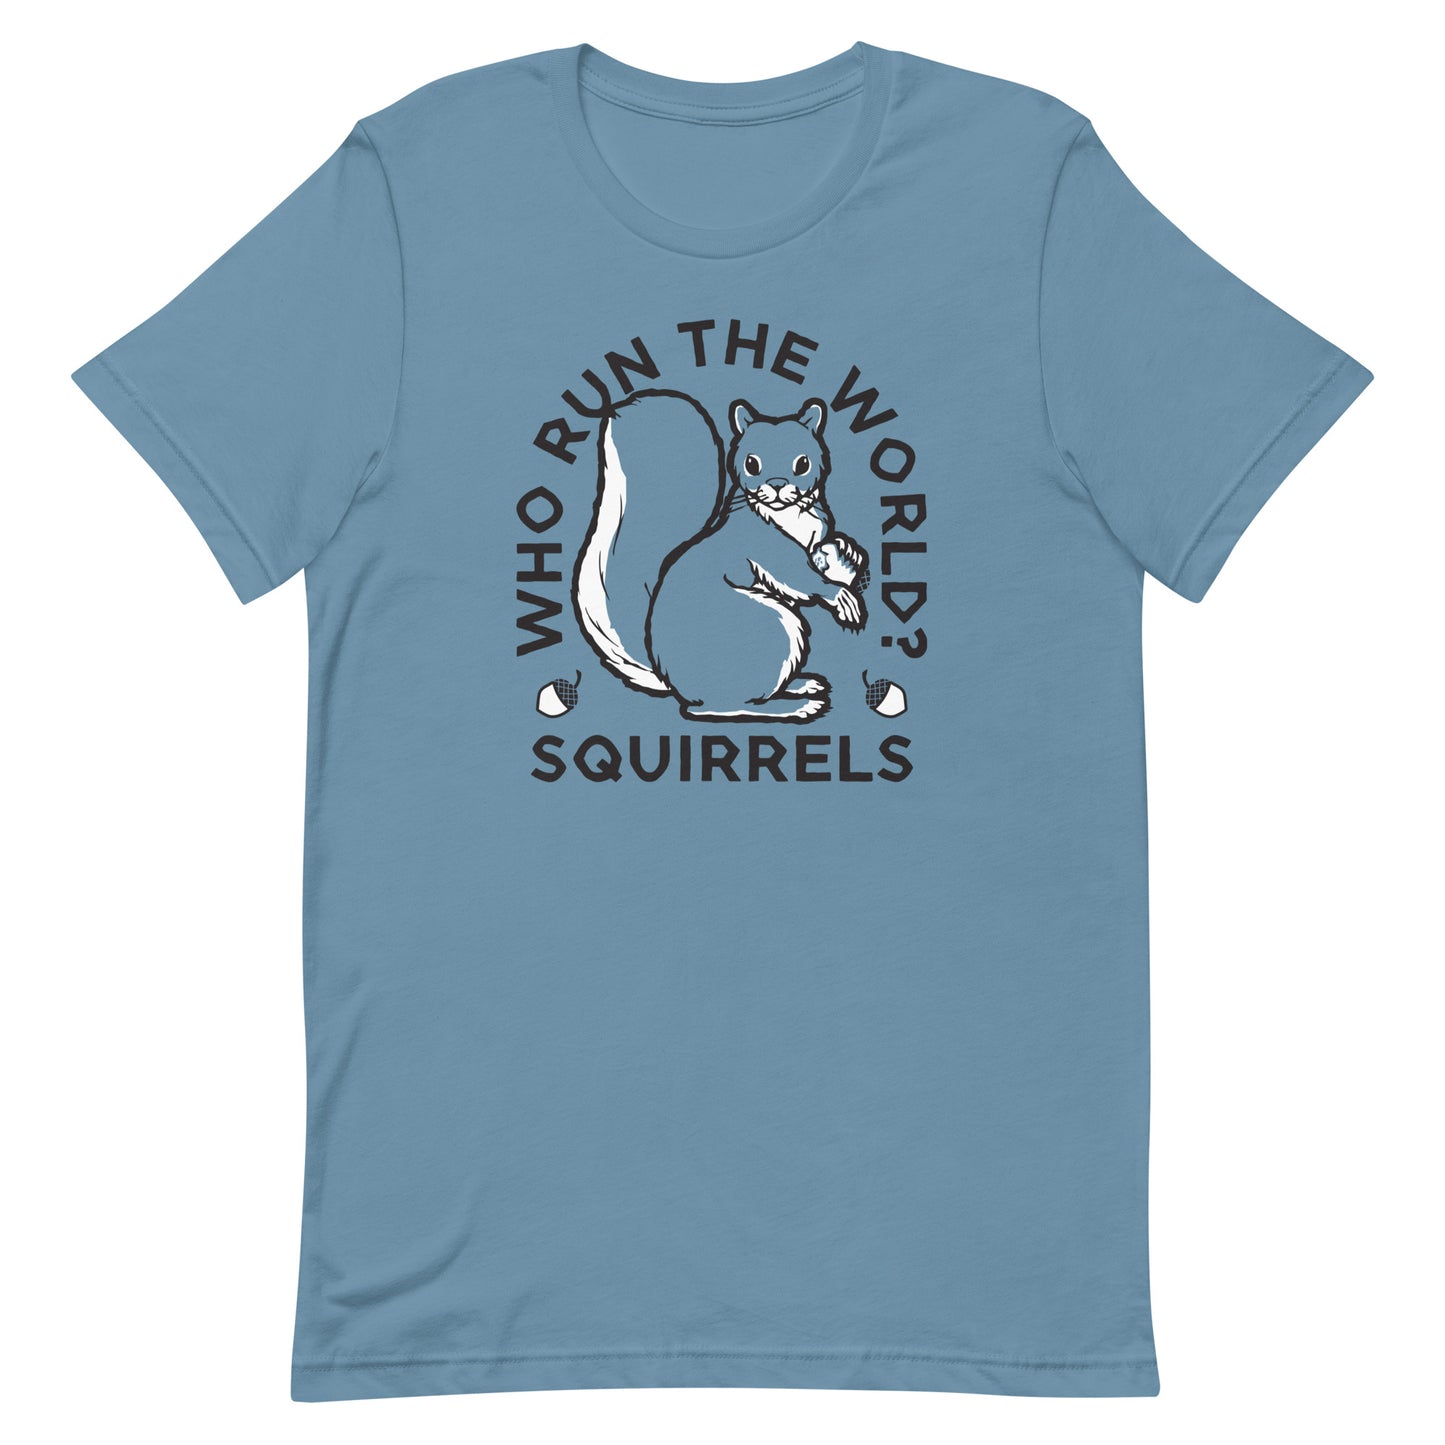 Who Run The World? Squirrels Men's Signature Tee